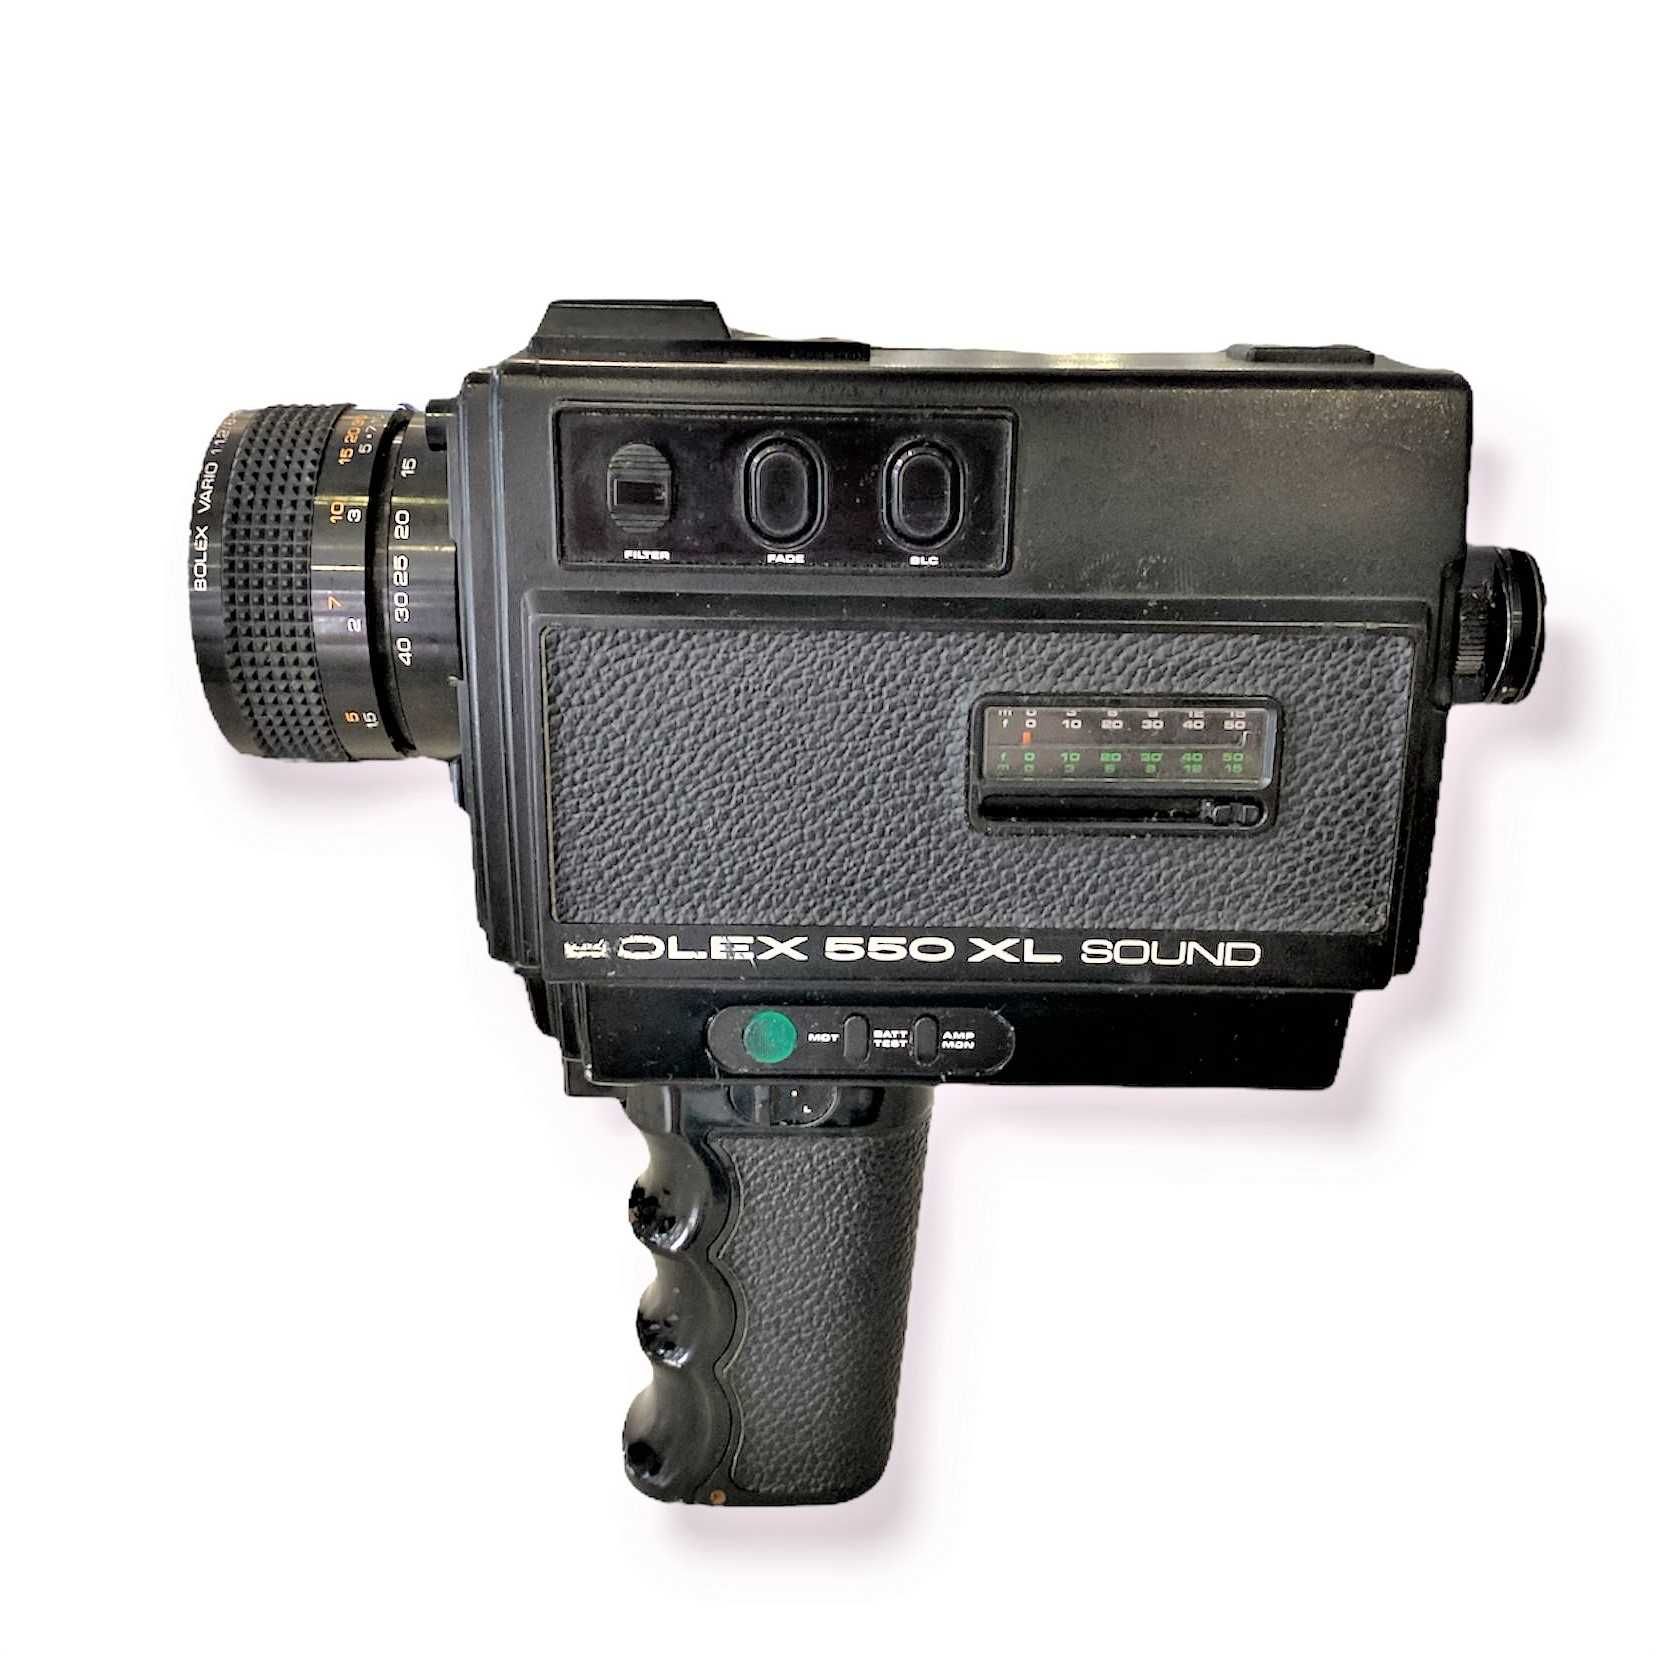 Maquina Filmar Bolex 550 XL Sound